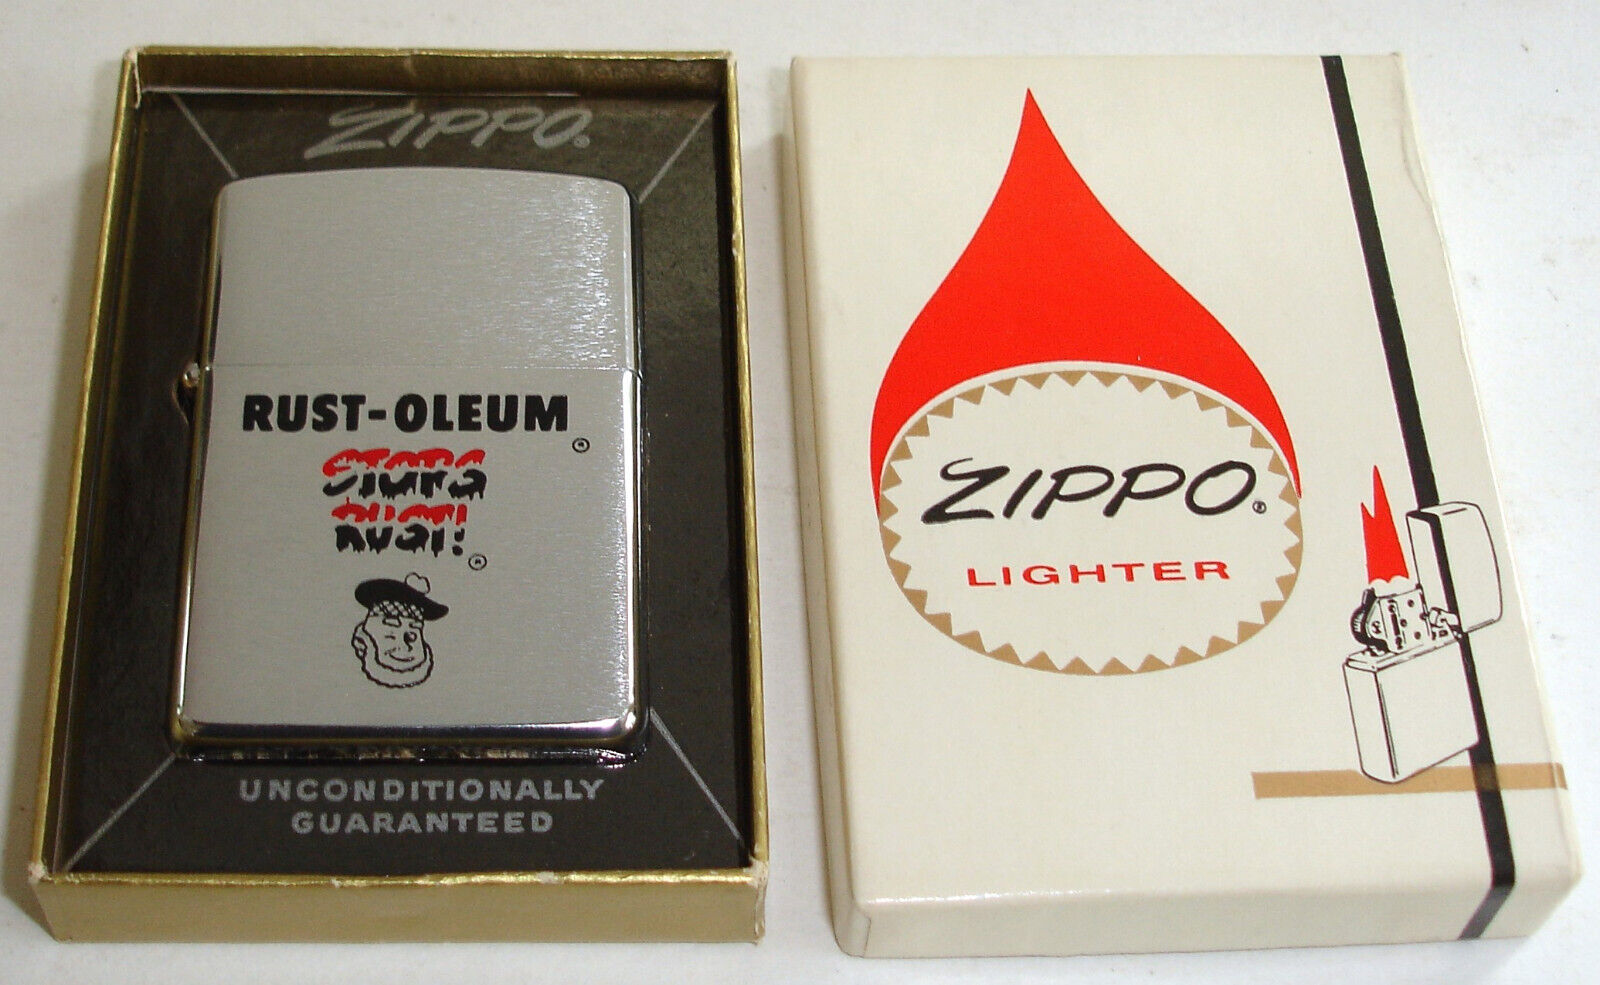 ~ 1966 ~ RUST-OLEUM STOPS RUST SCOTTY the Painter Zippo Lighter NEW in BOX